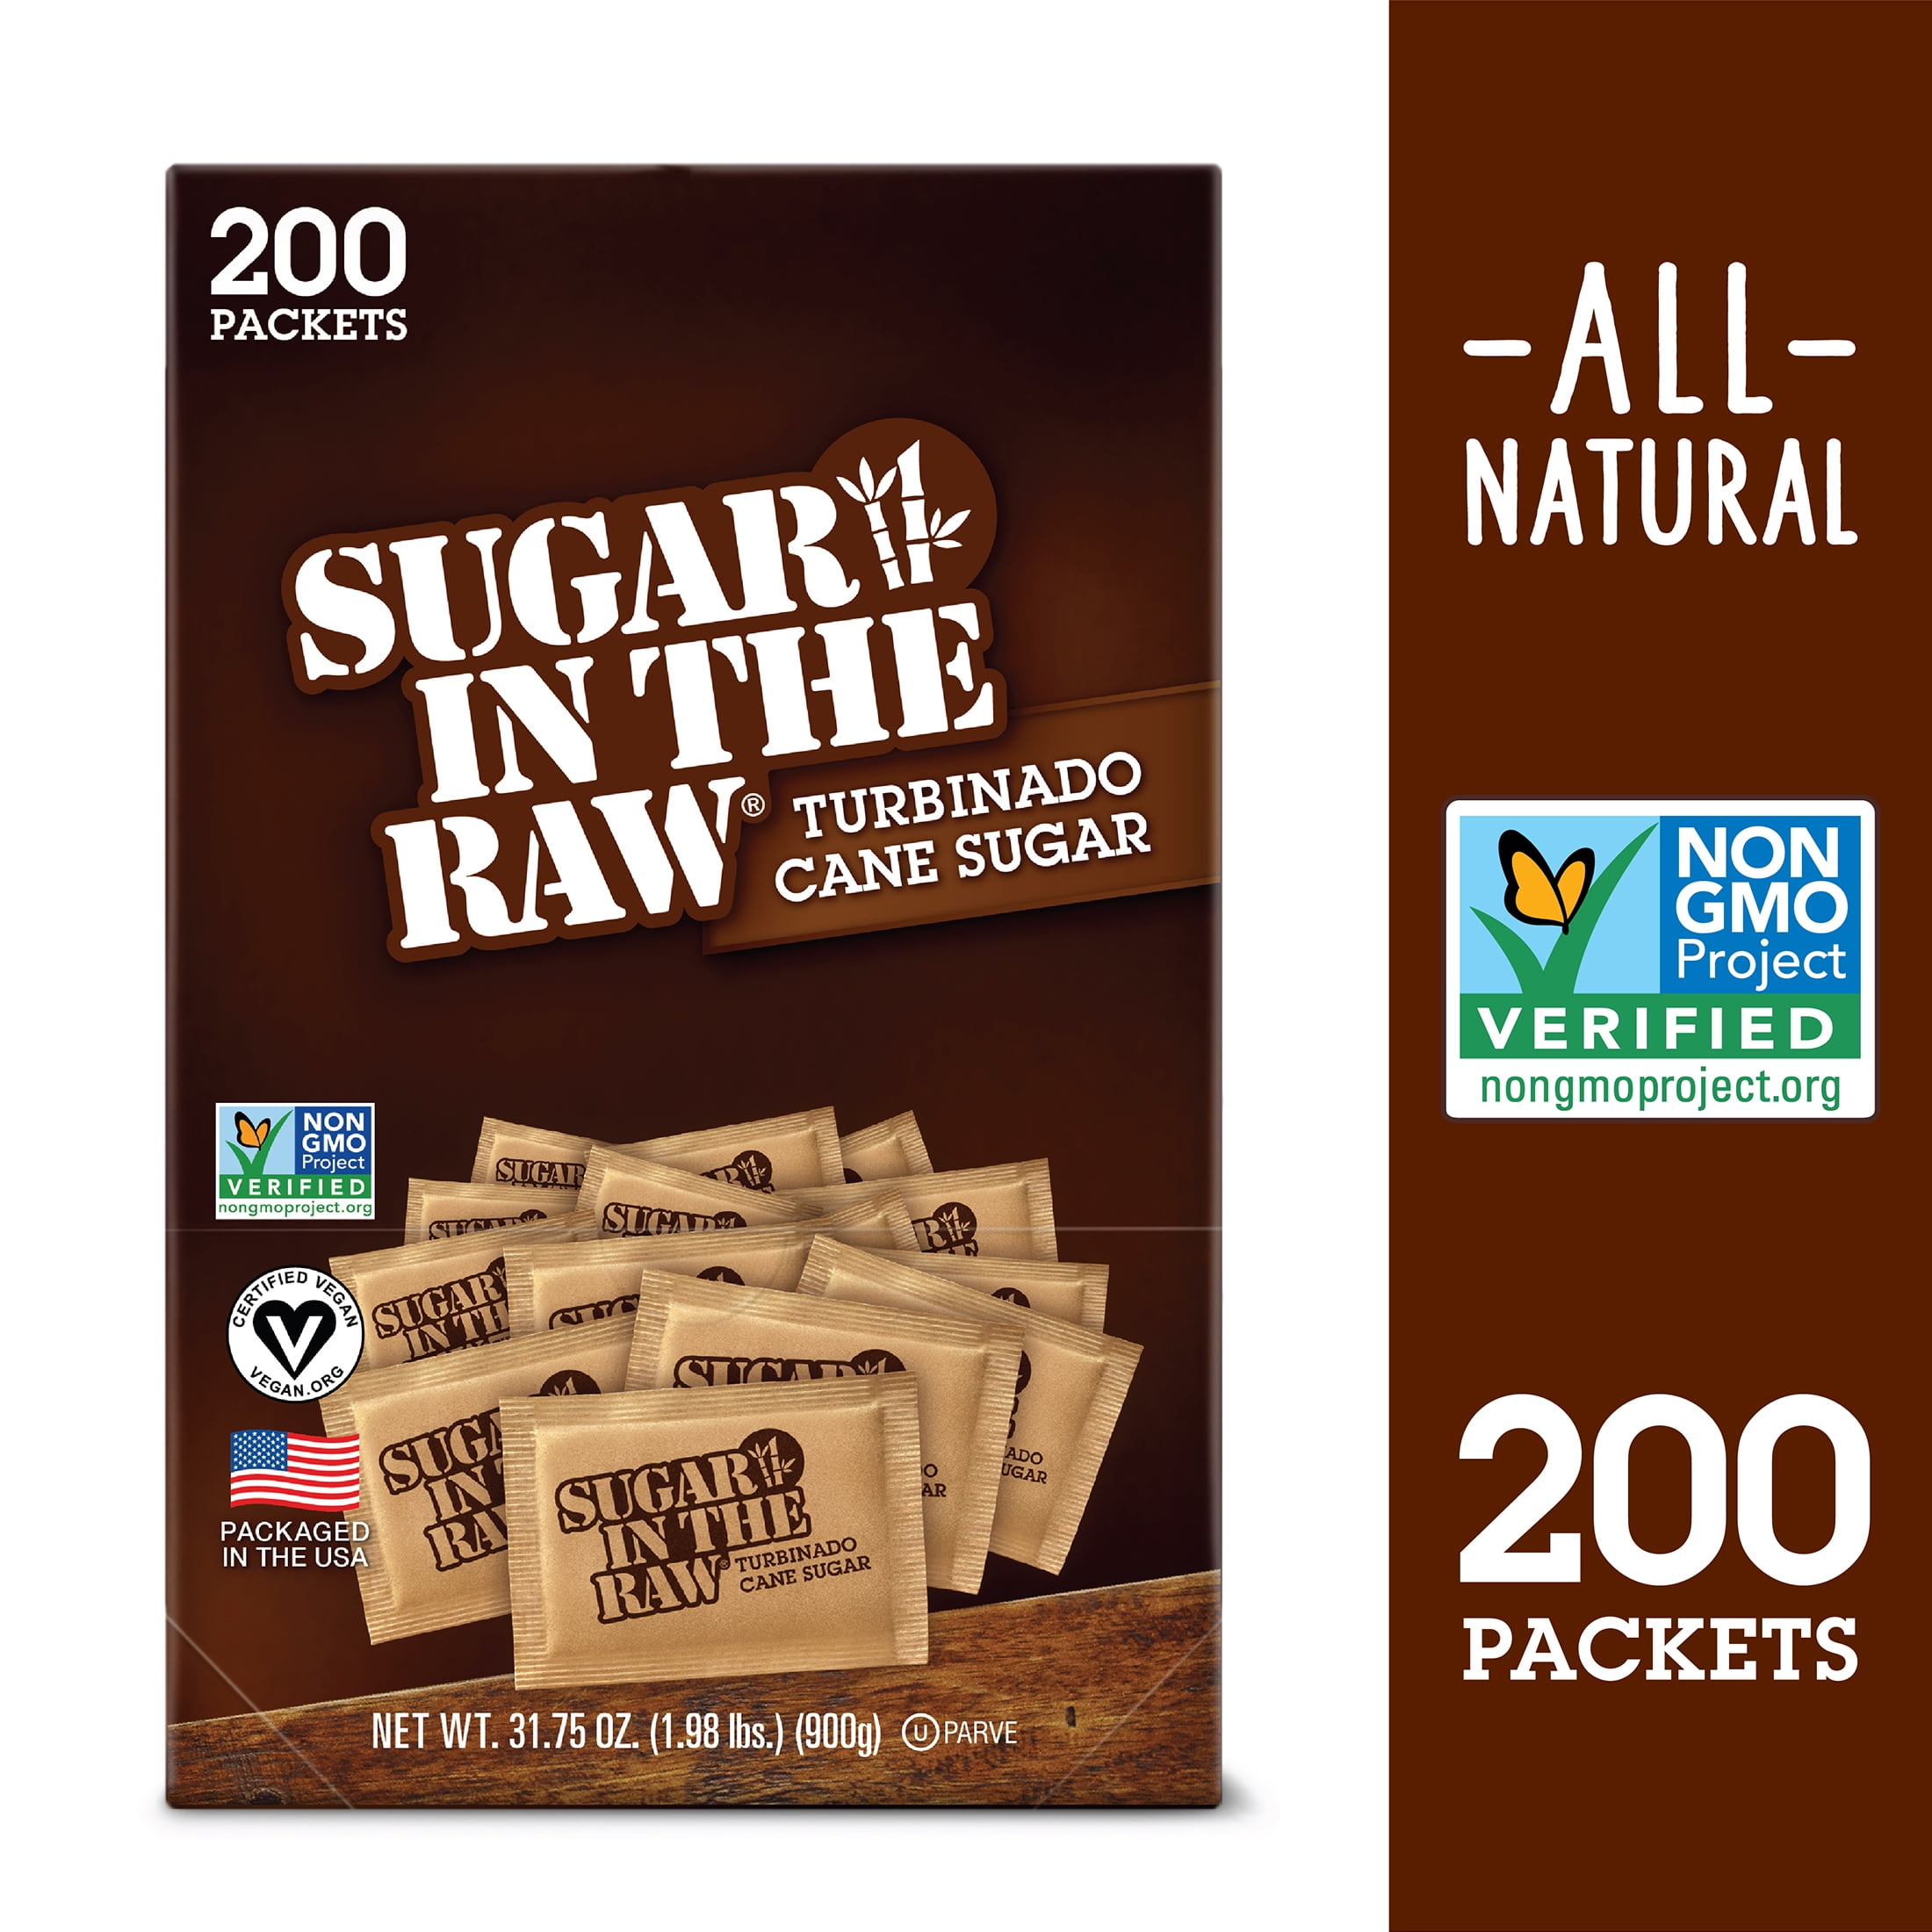 BIO-07020 1000 Fair Trade Sugar Small Brown Sugar Coffee to Go Accessories 